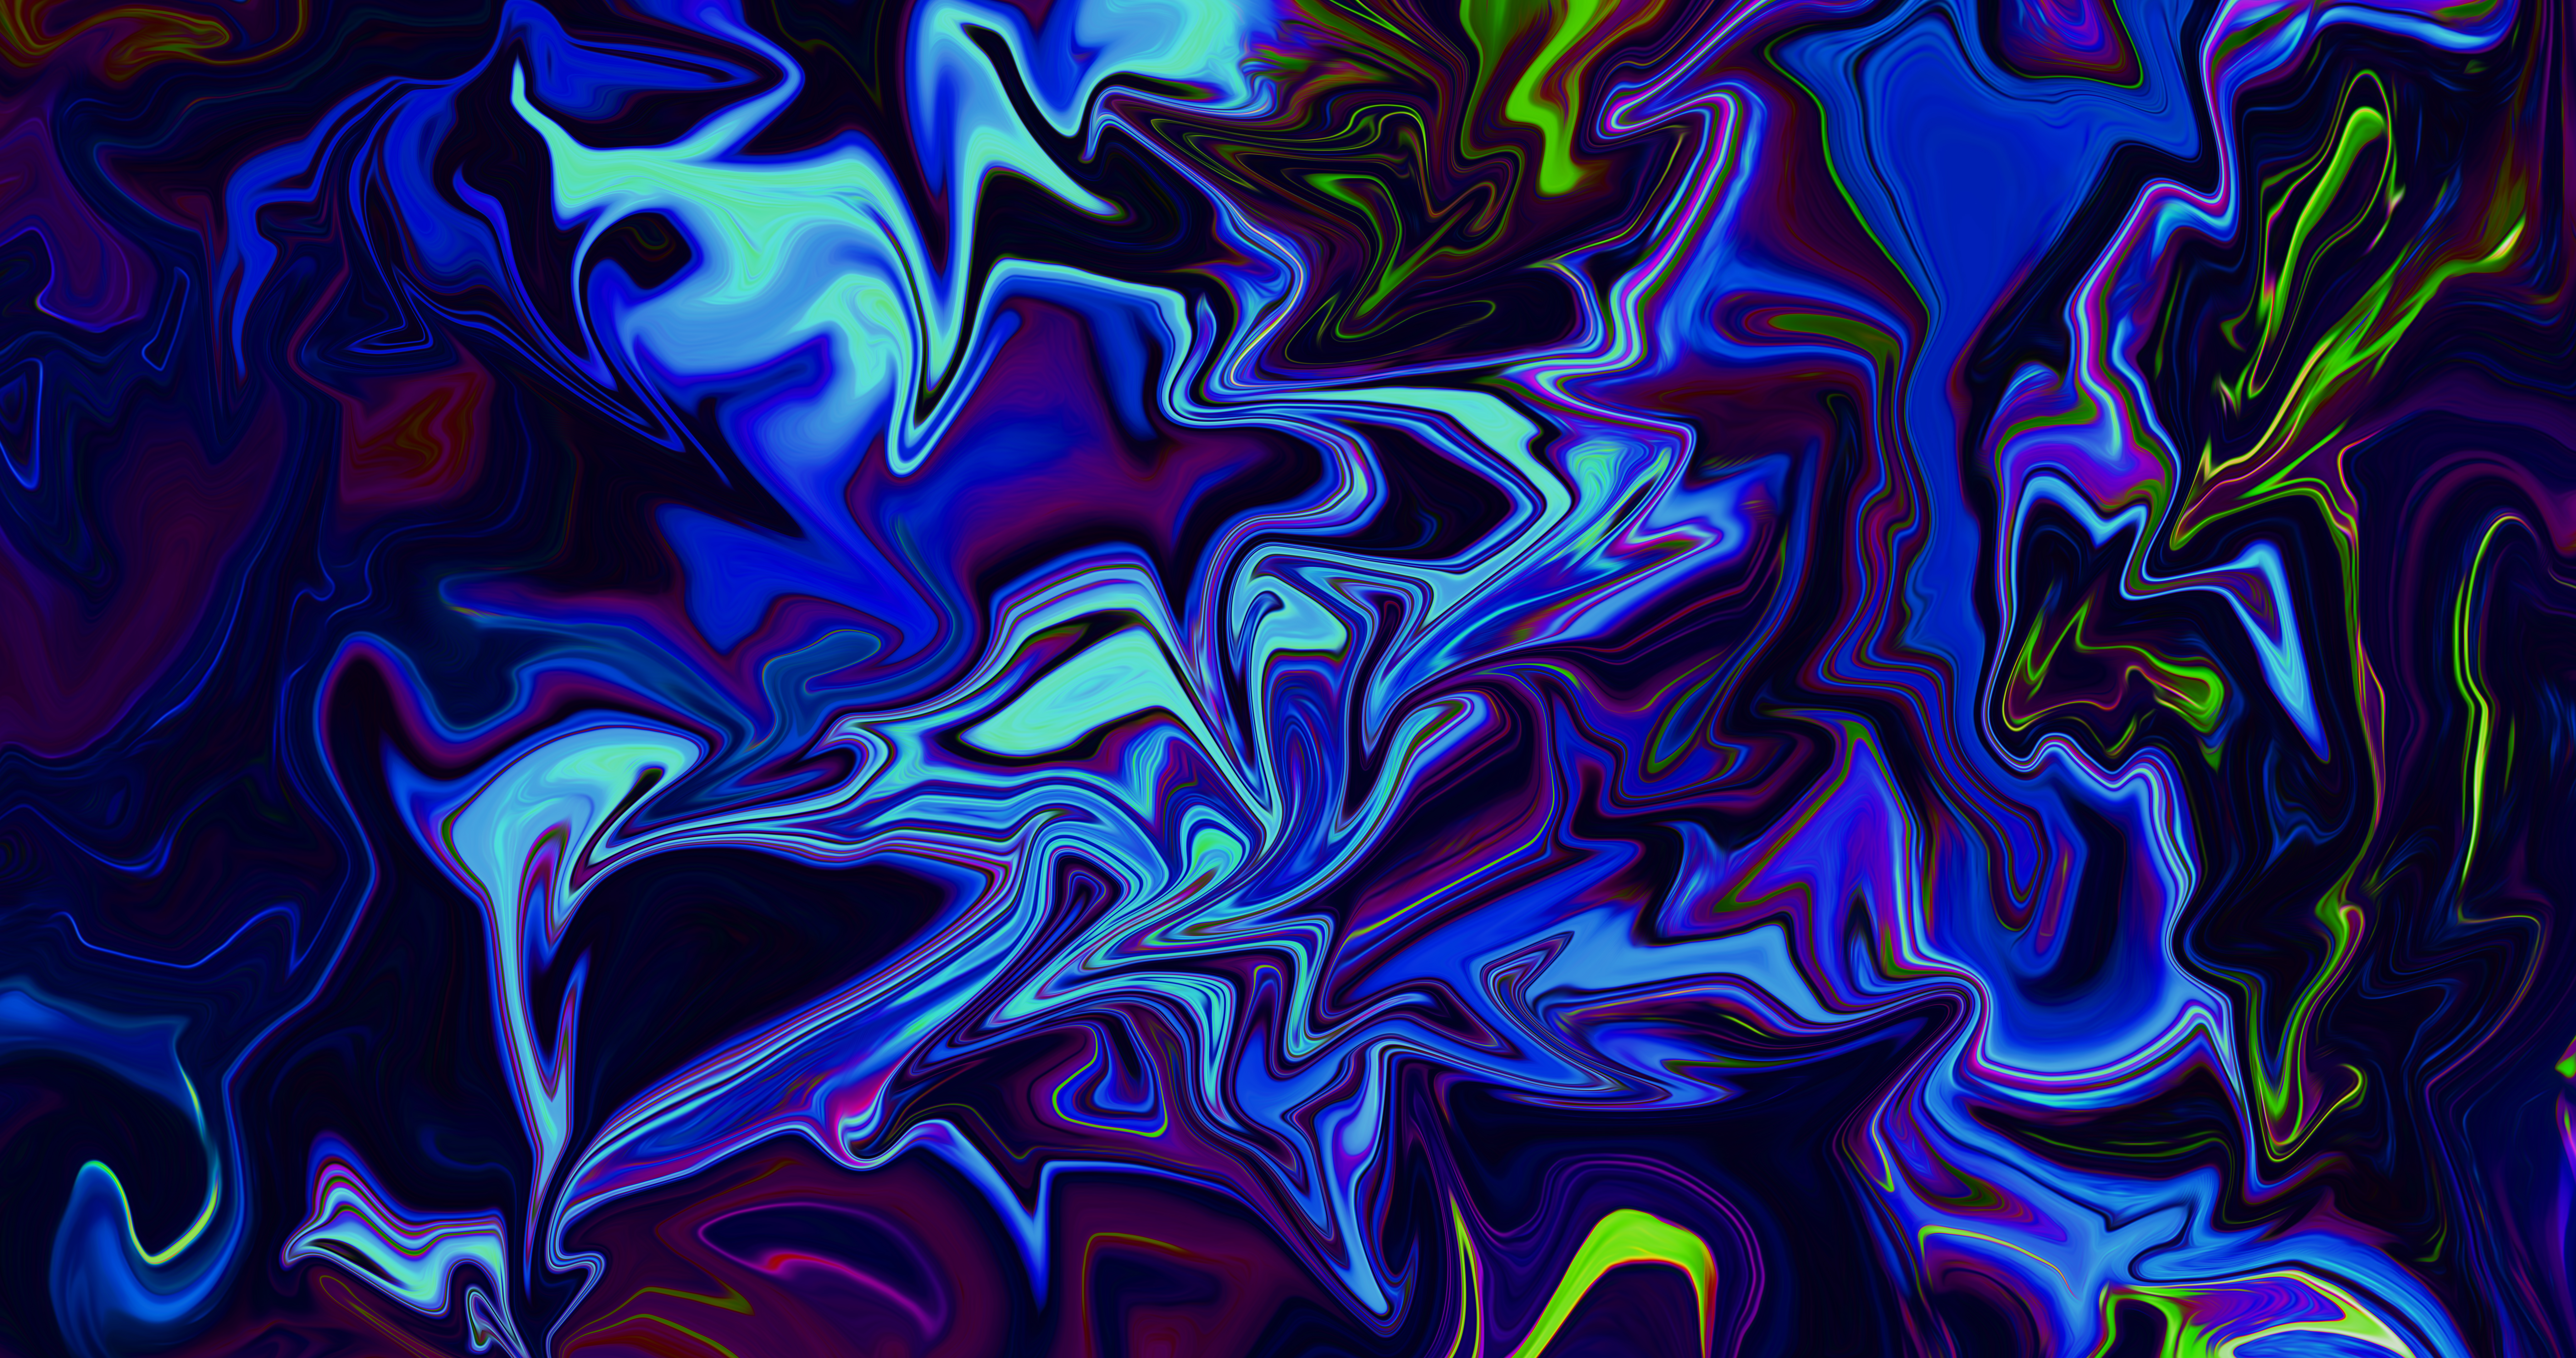 General 8192x4320 abstract shapes colorful fluid liquid artwork digital art paint brushes neon blue purple dark 8 K